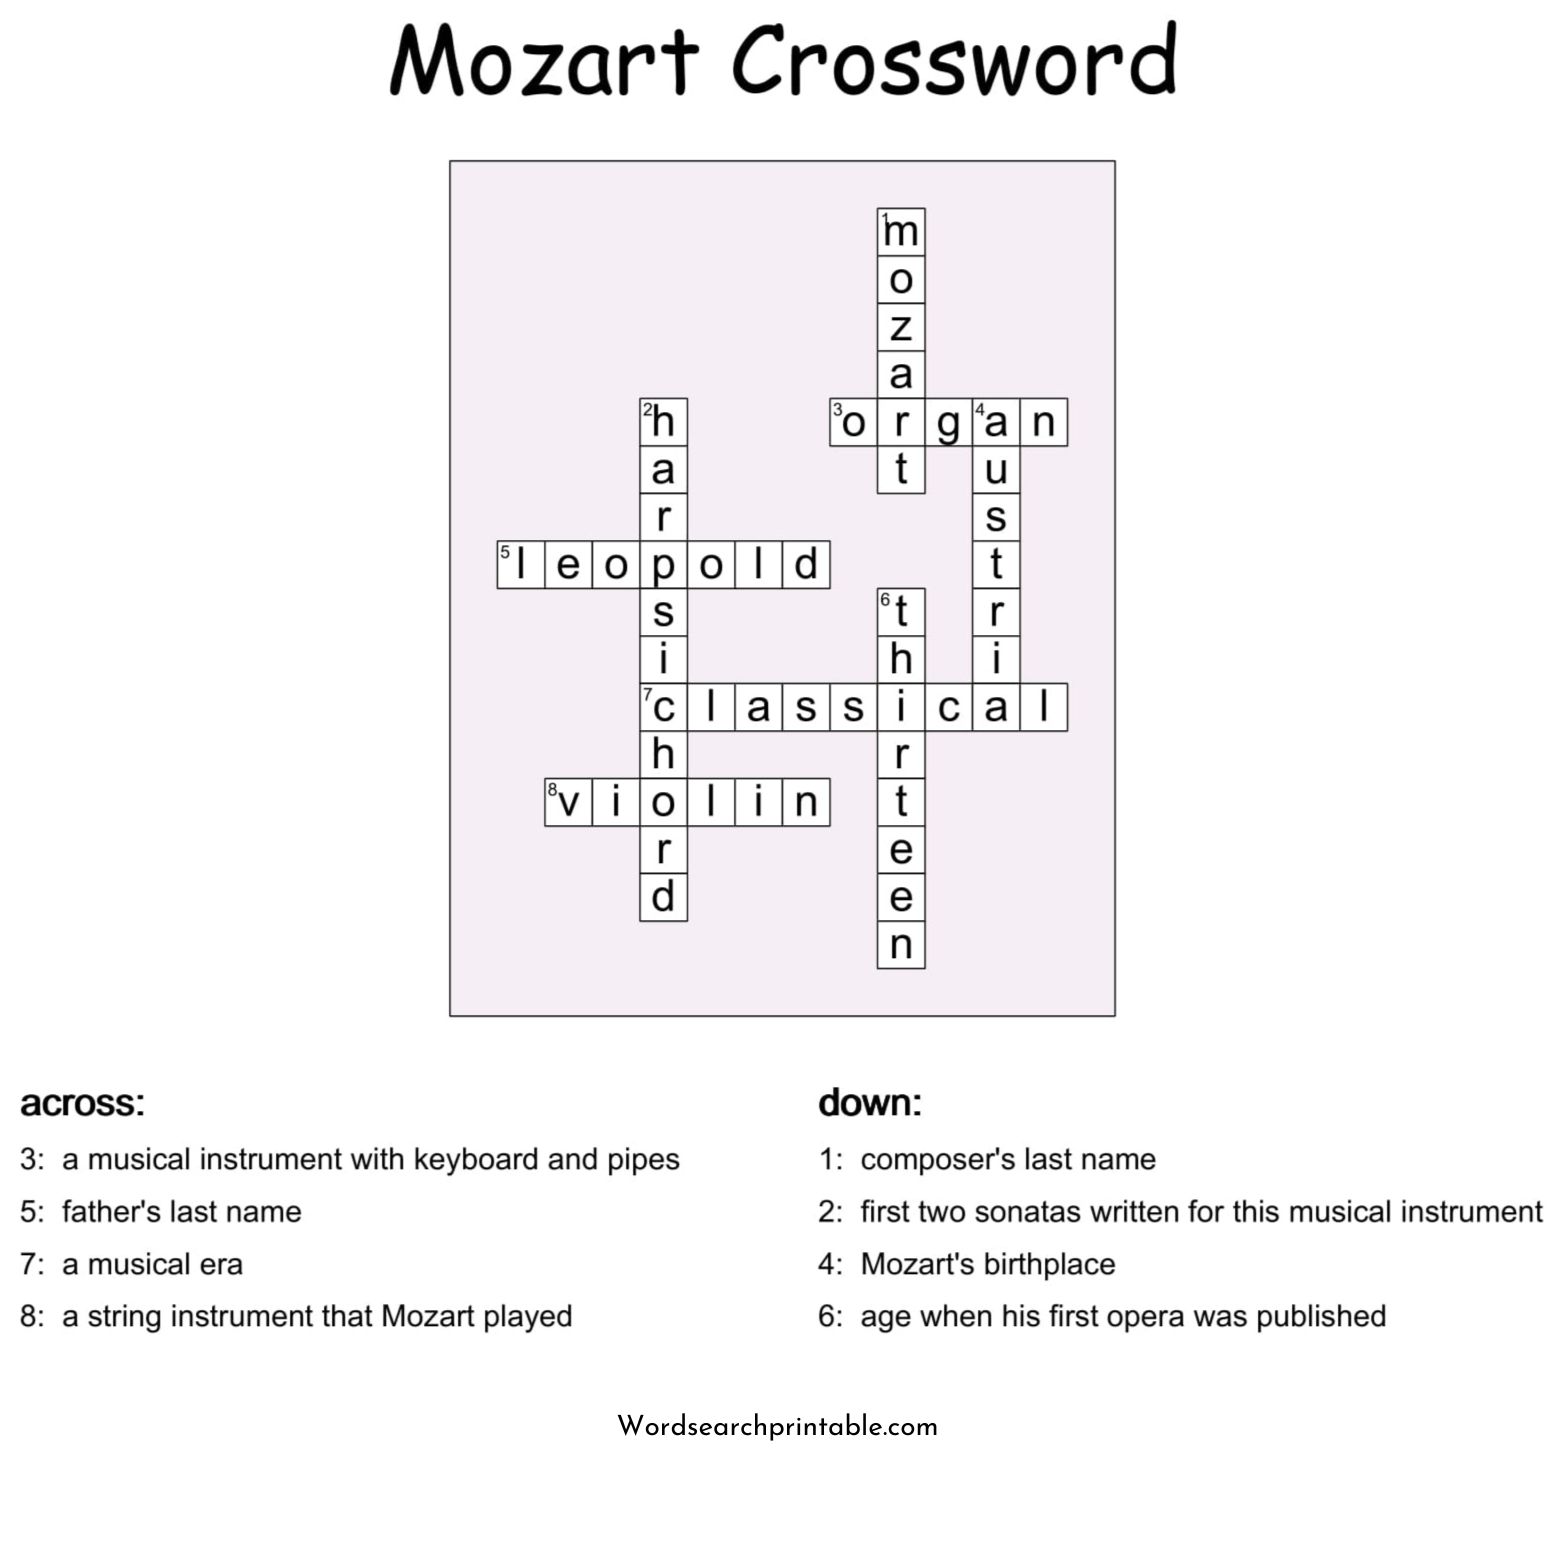 mozart crossword puzzle solution